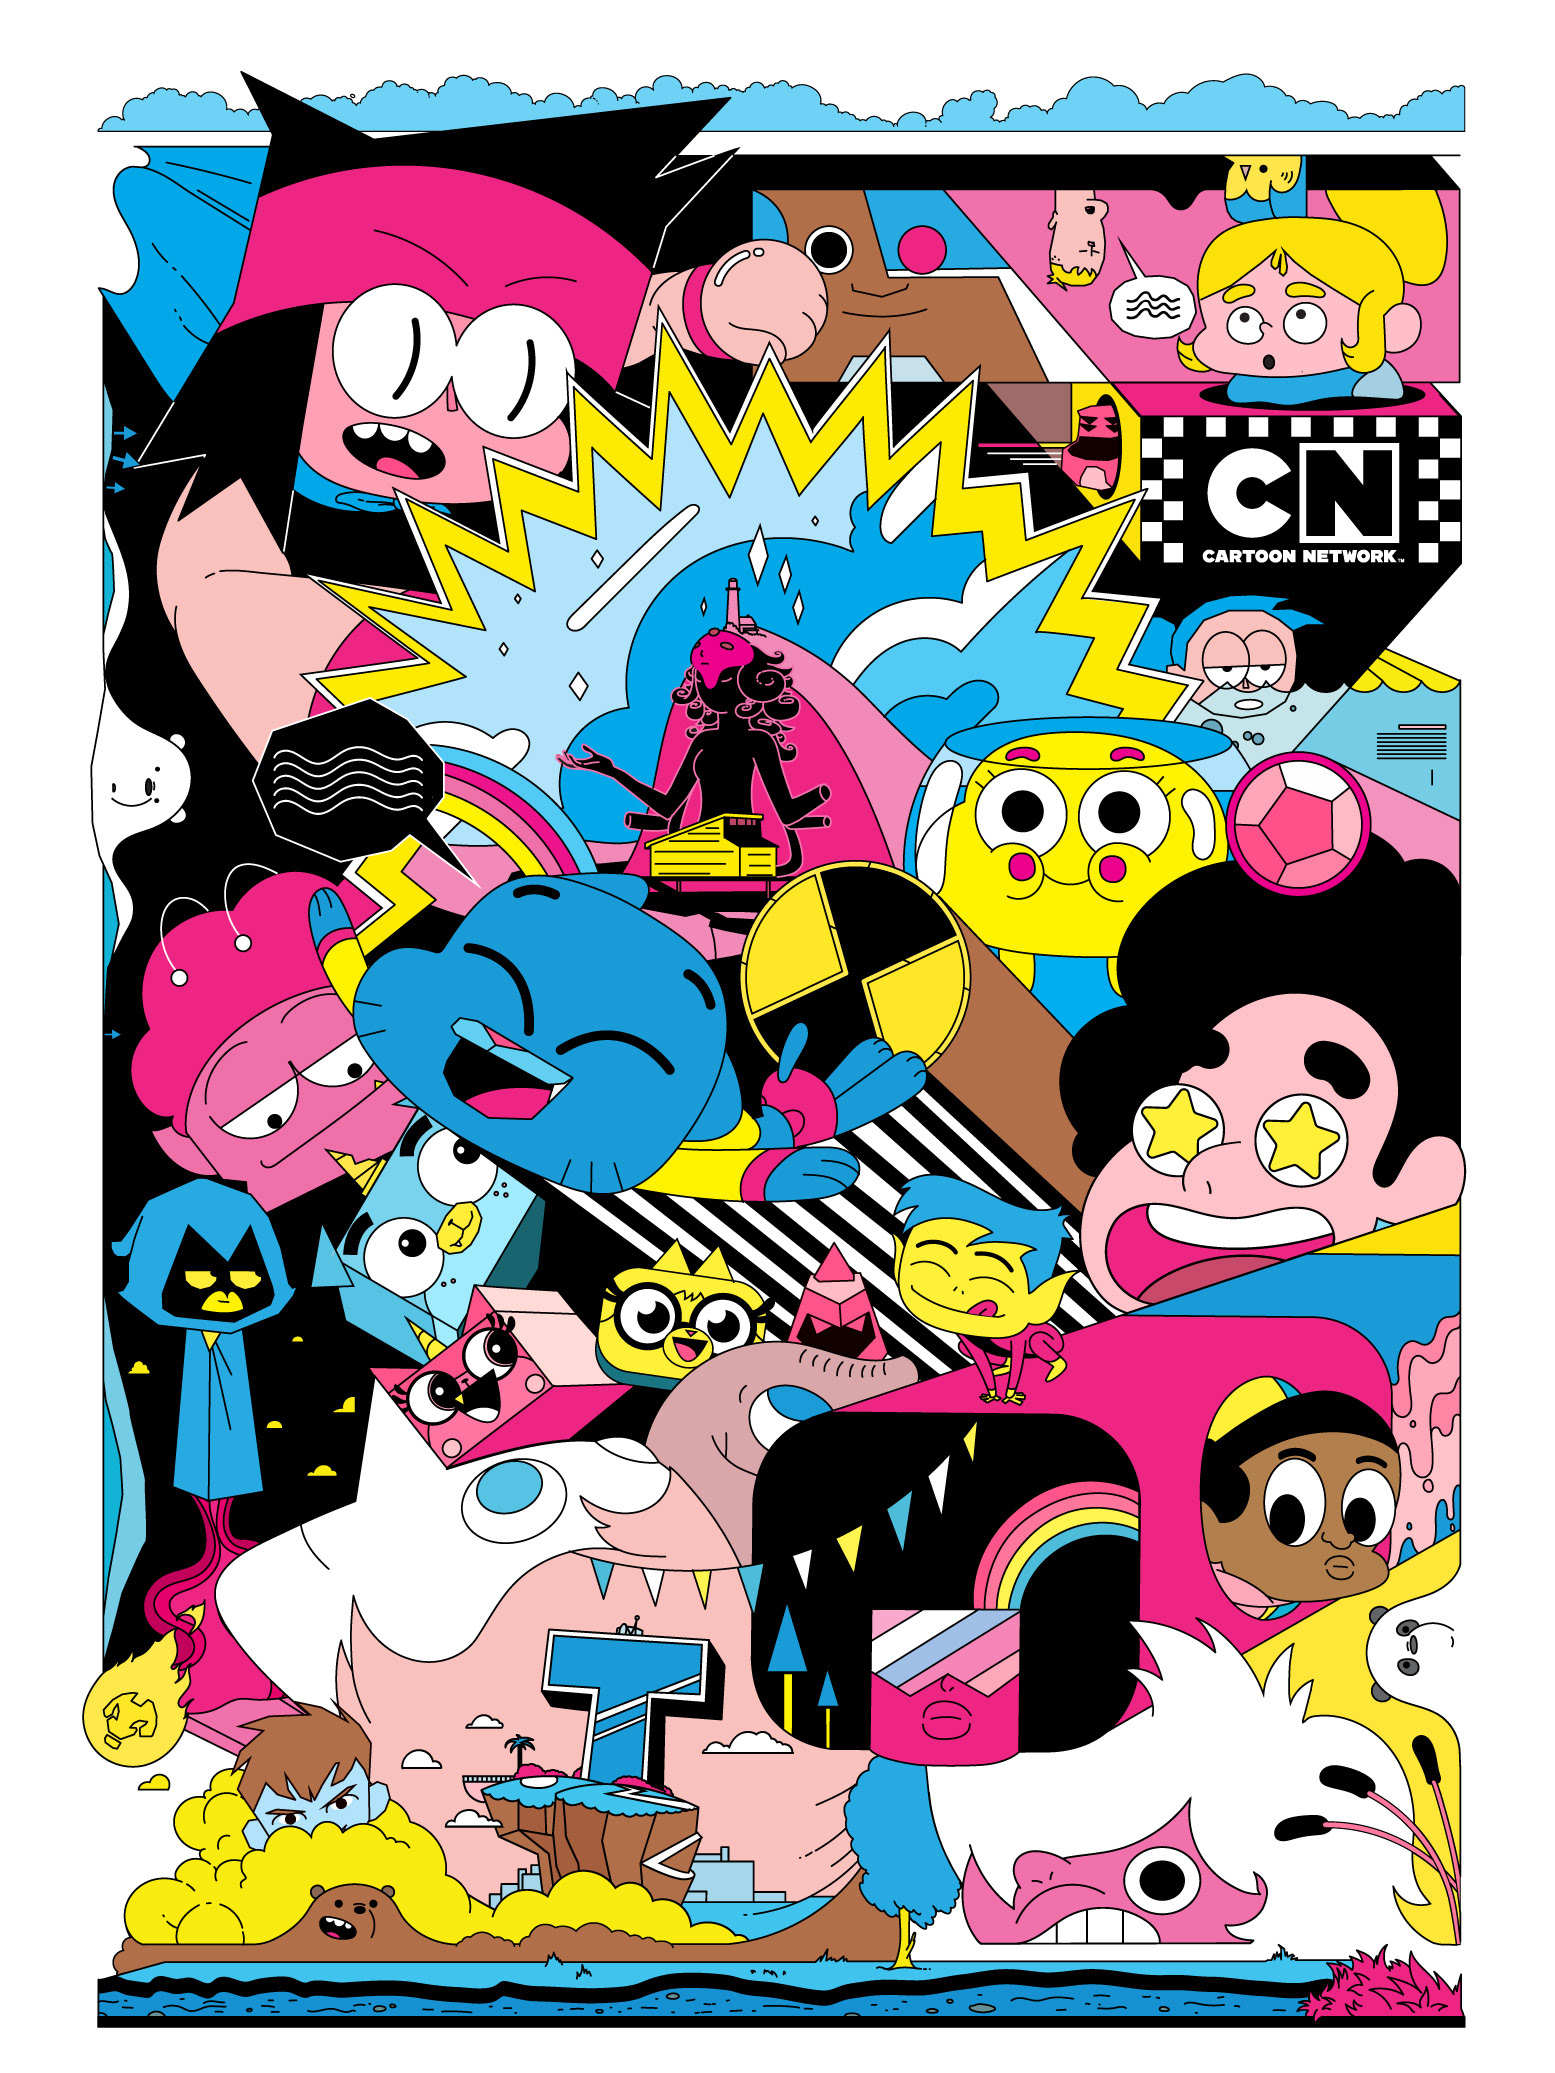 Cartoon Network - Official 2018 key art posters on Behance